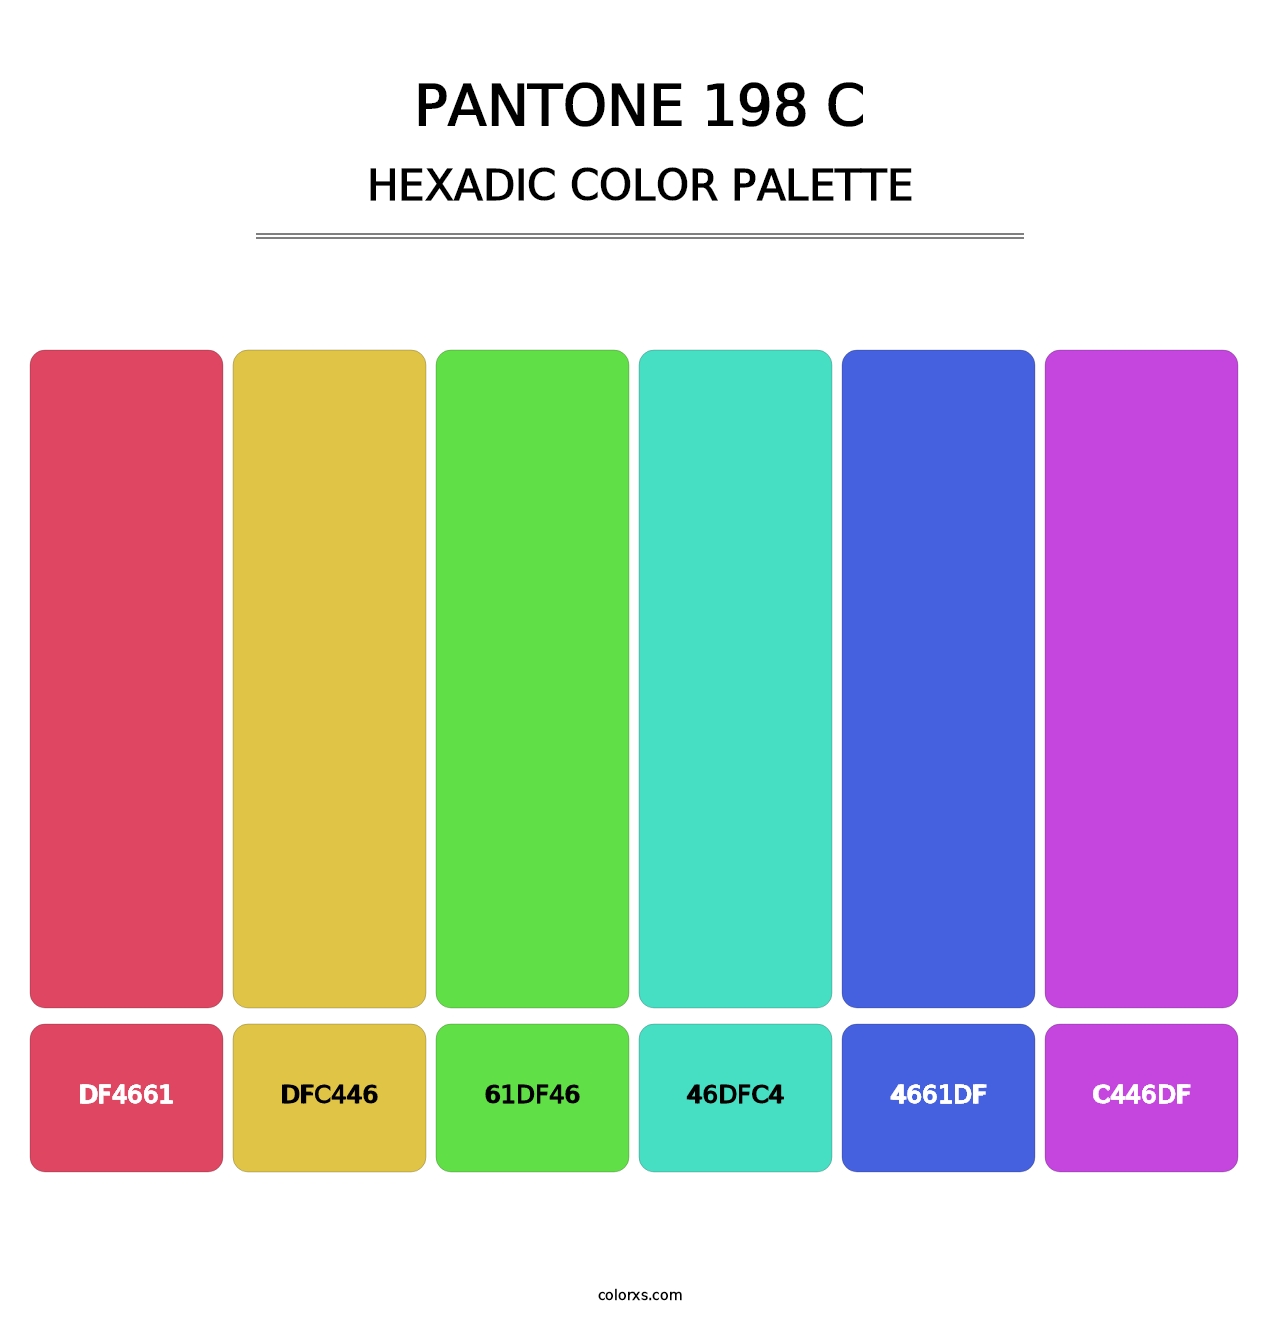 PANTONE 198 C - Hexadic Color Palette